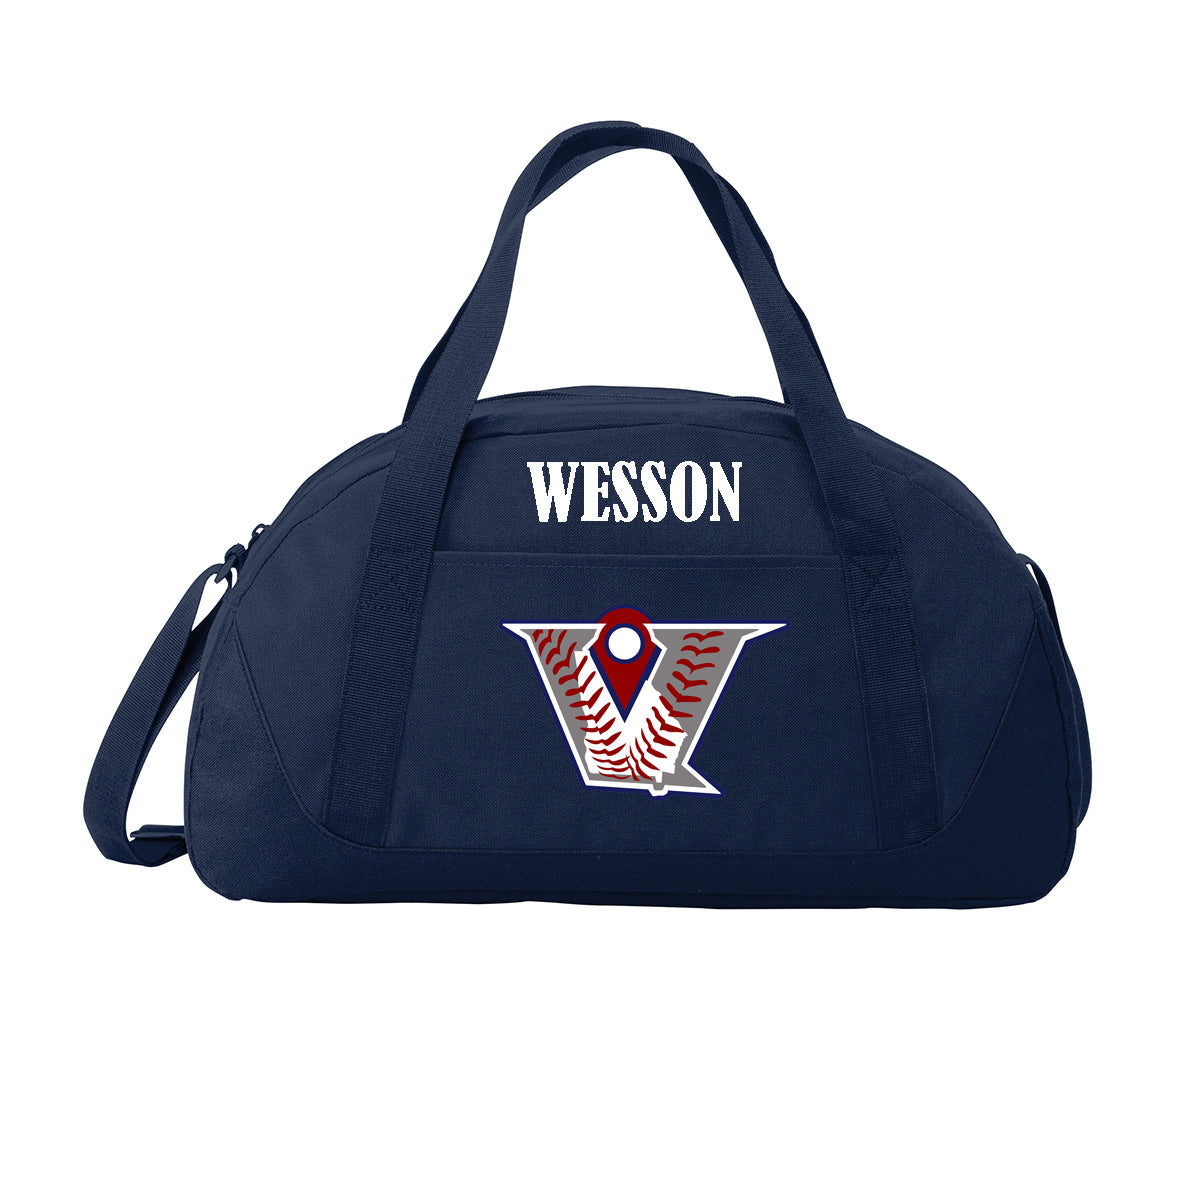 Velo BB - Dome Duffle Bag with Velocity Baseball Logo - Navy (BG818) - Southern Grace Creations